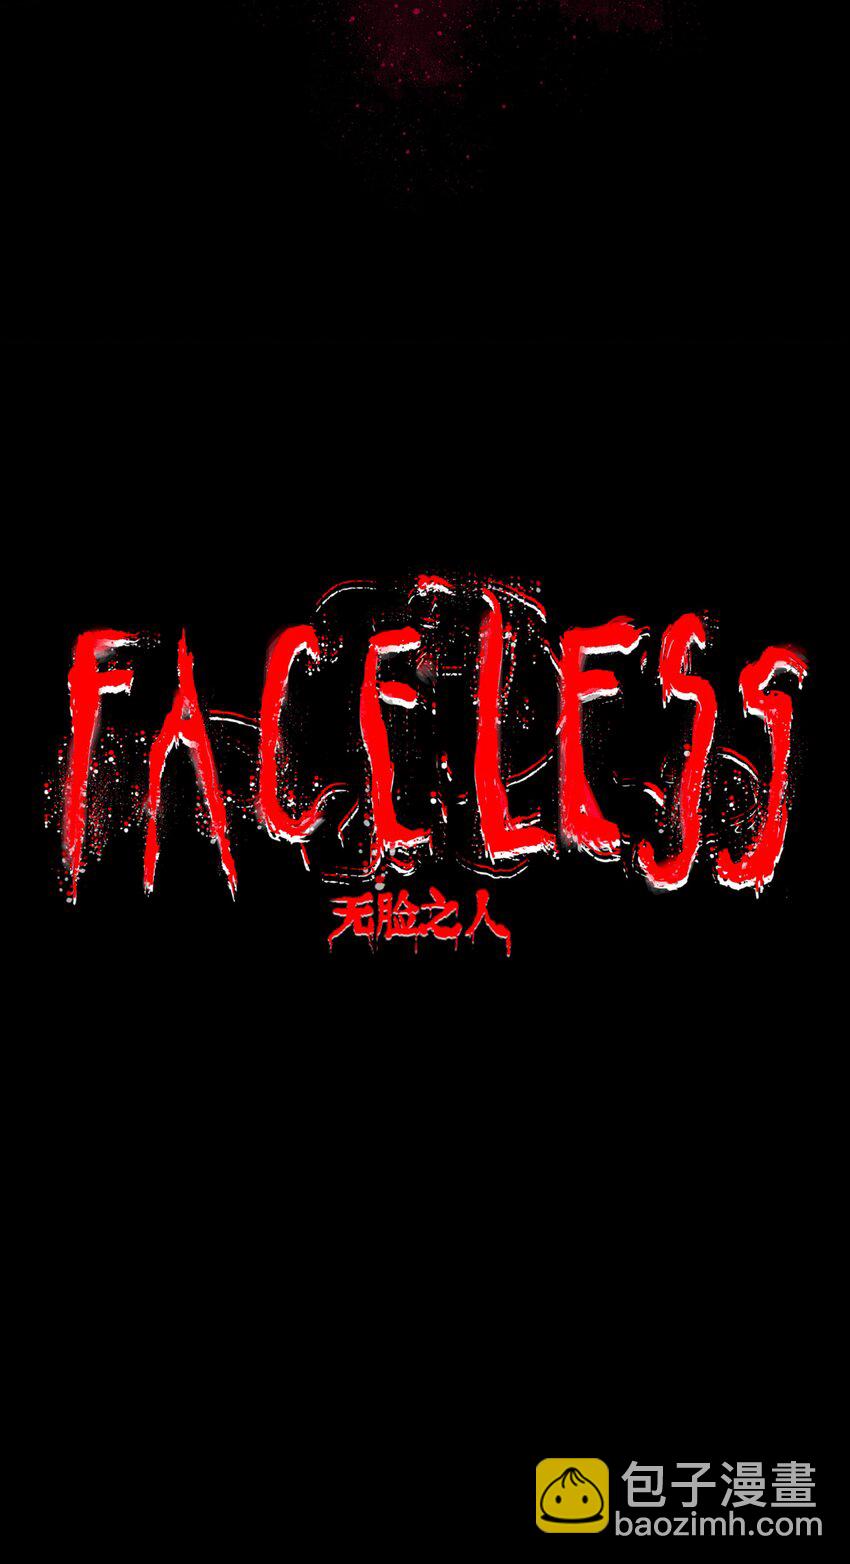 FACELESS - 預告 無臉之人 - 3